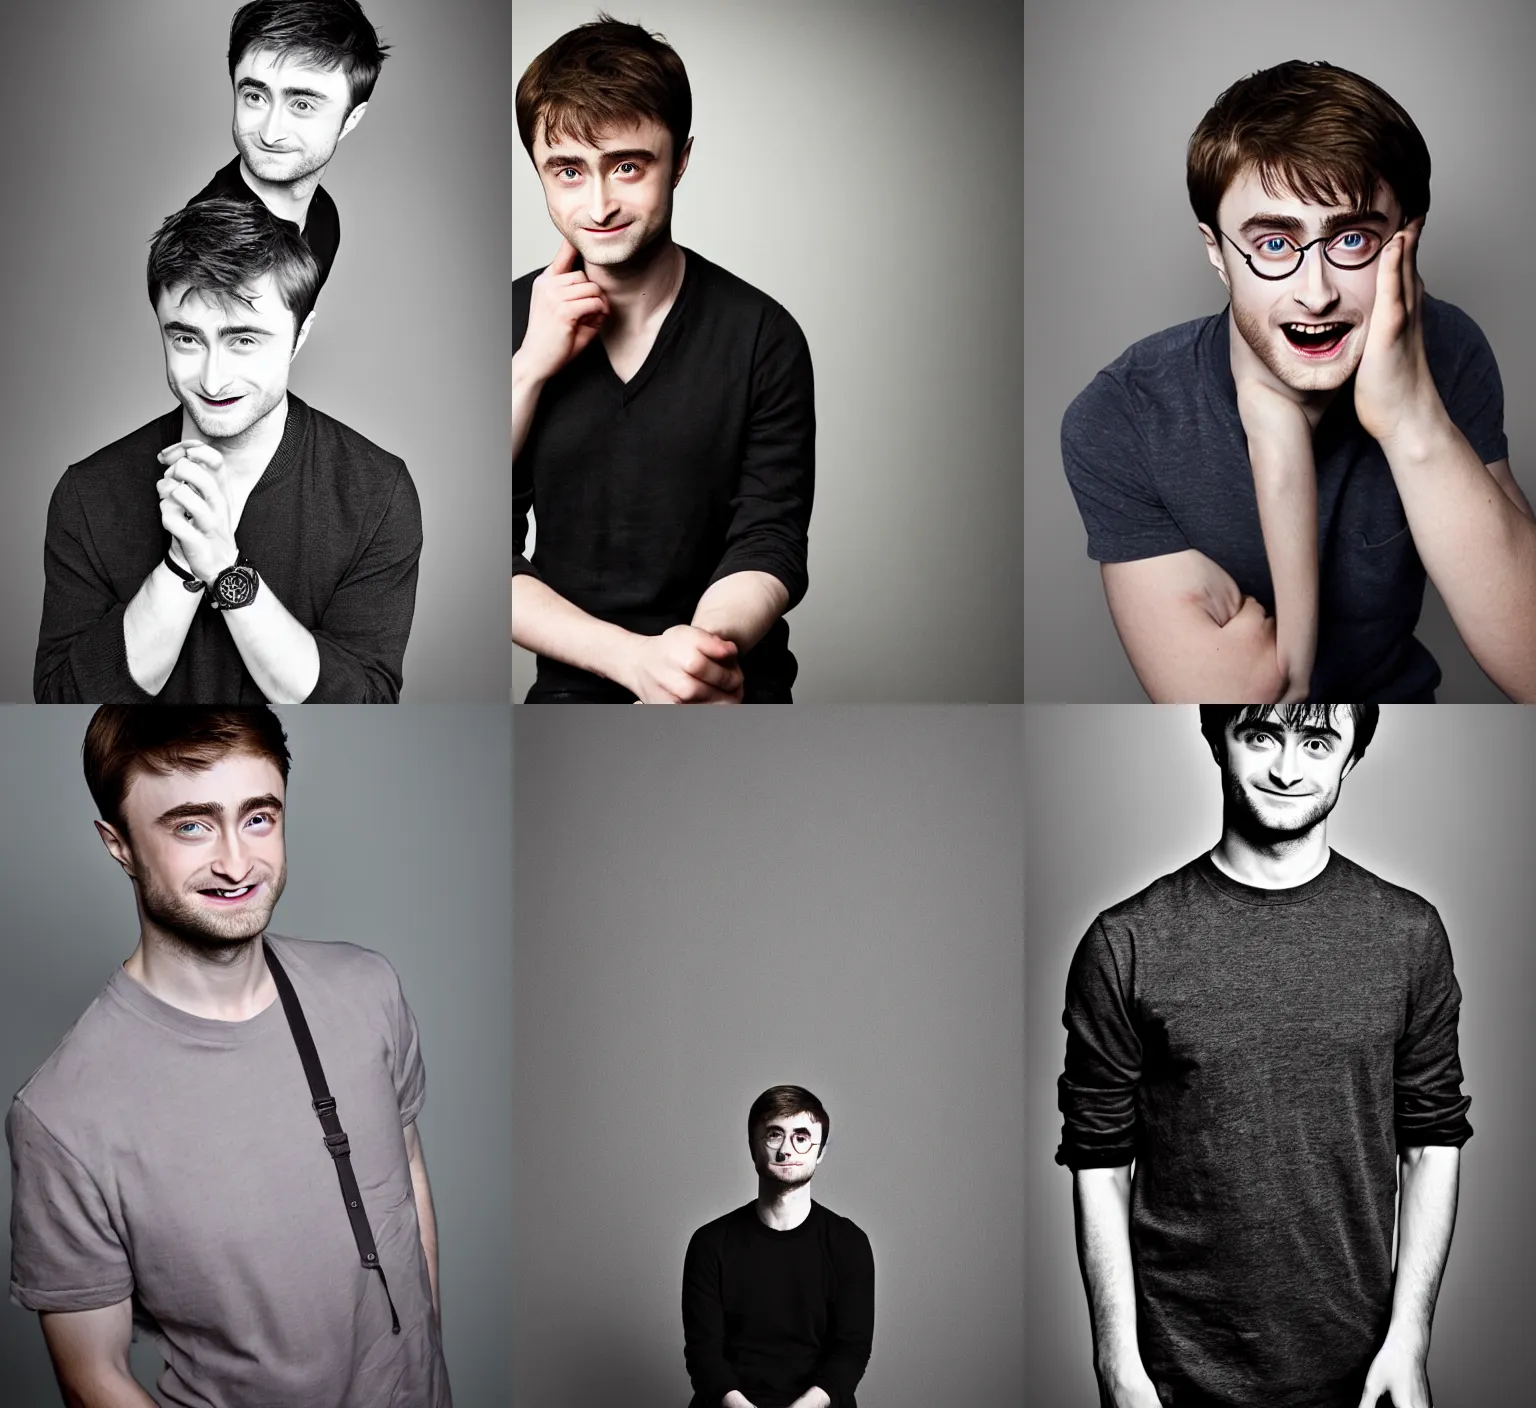 Prompt: medium shot, portrait of Daniel Radcliffe, studio lighting, portrait photography,